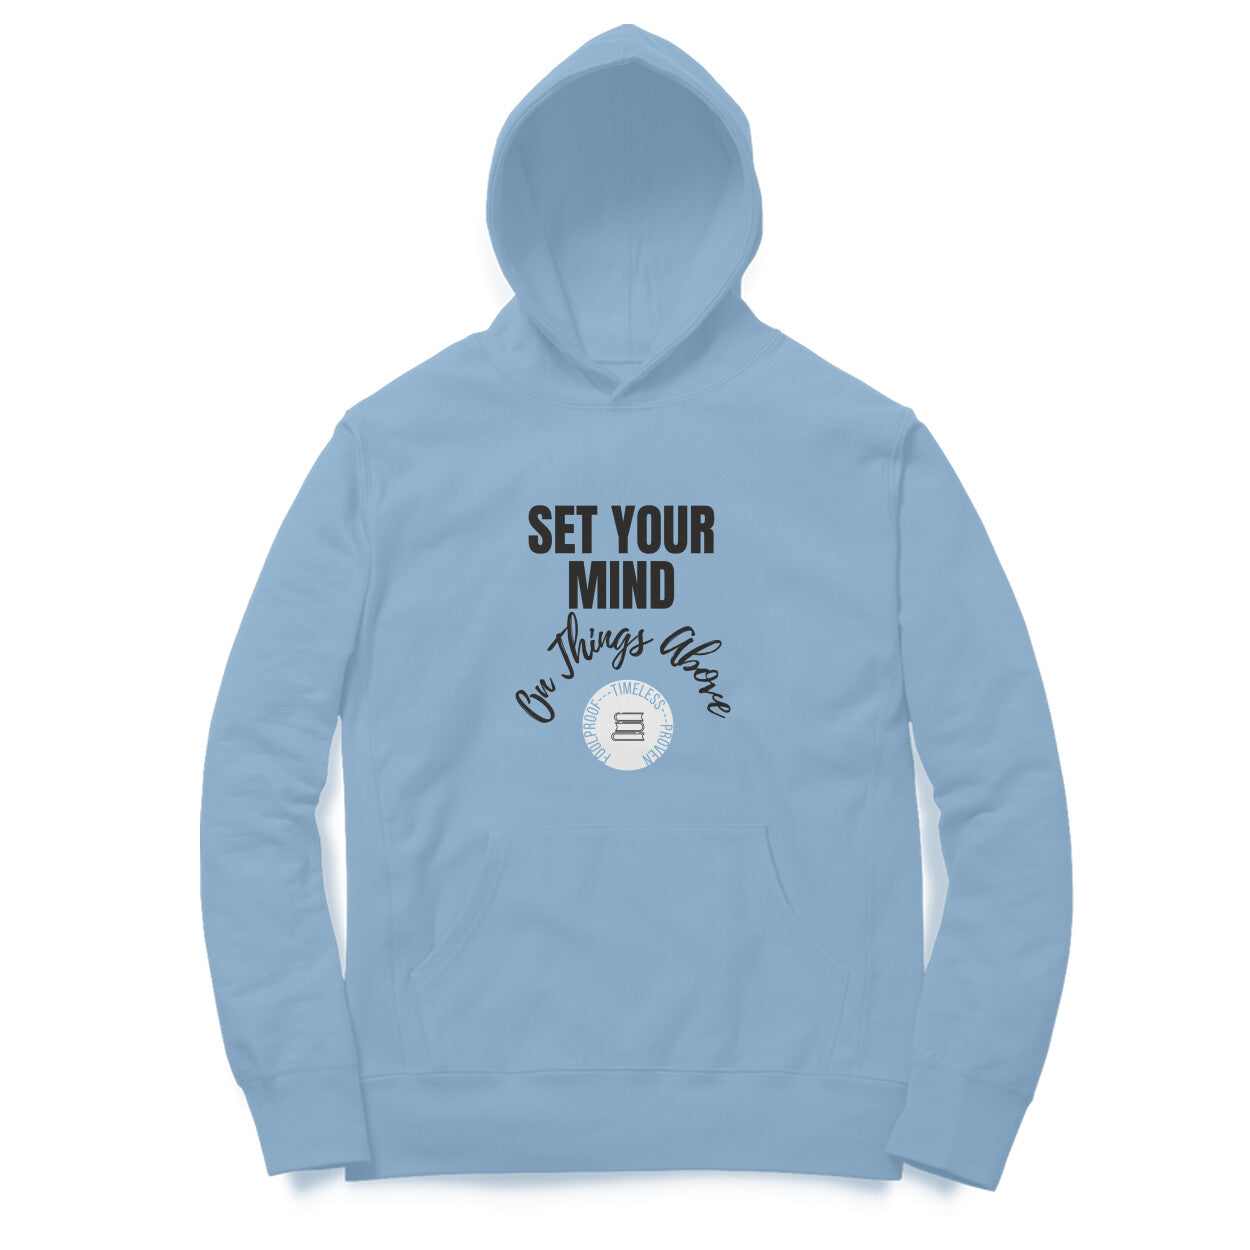 Set your mind' hoodie